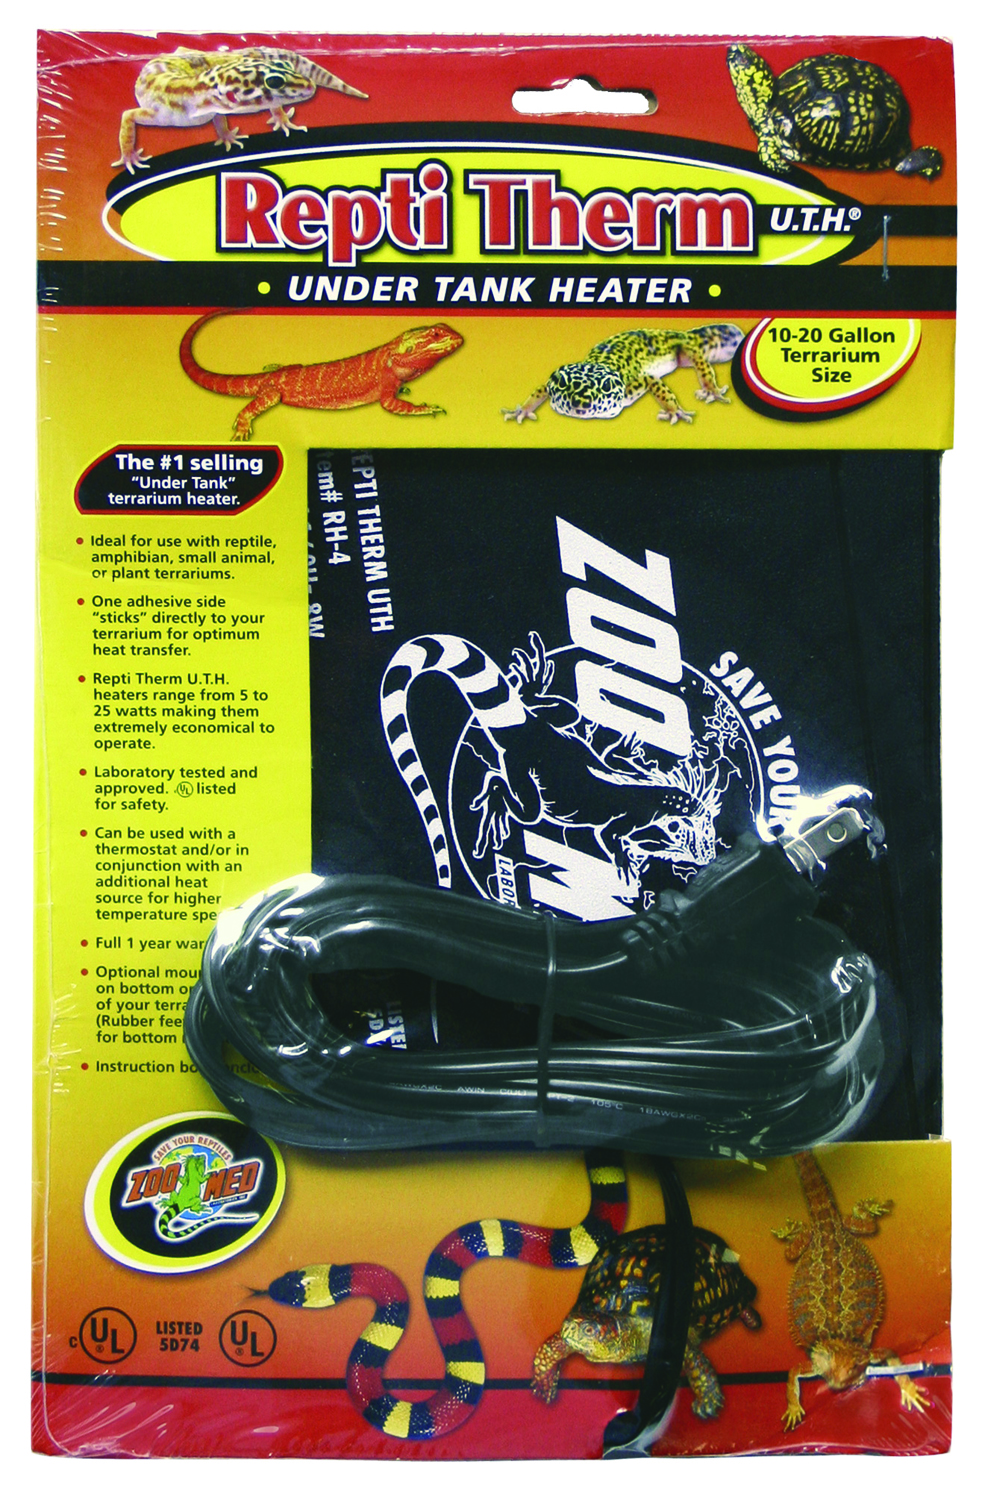 Reptitherm Uth Under Tank Heater - 10-20 Gal